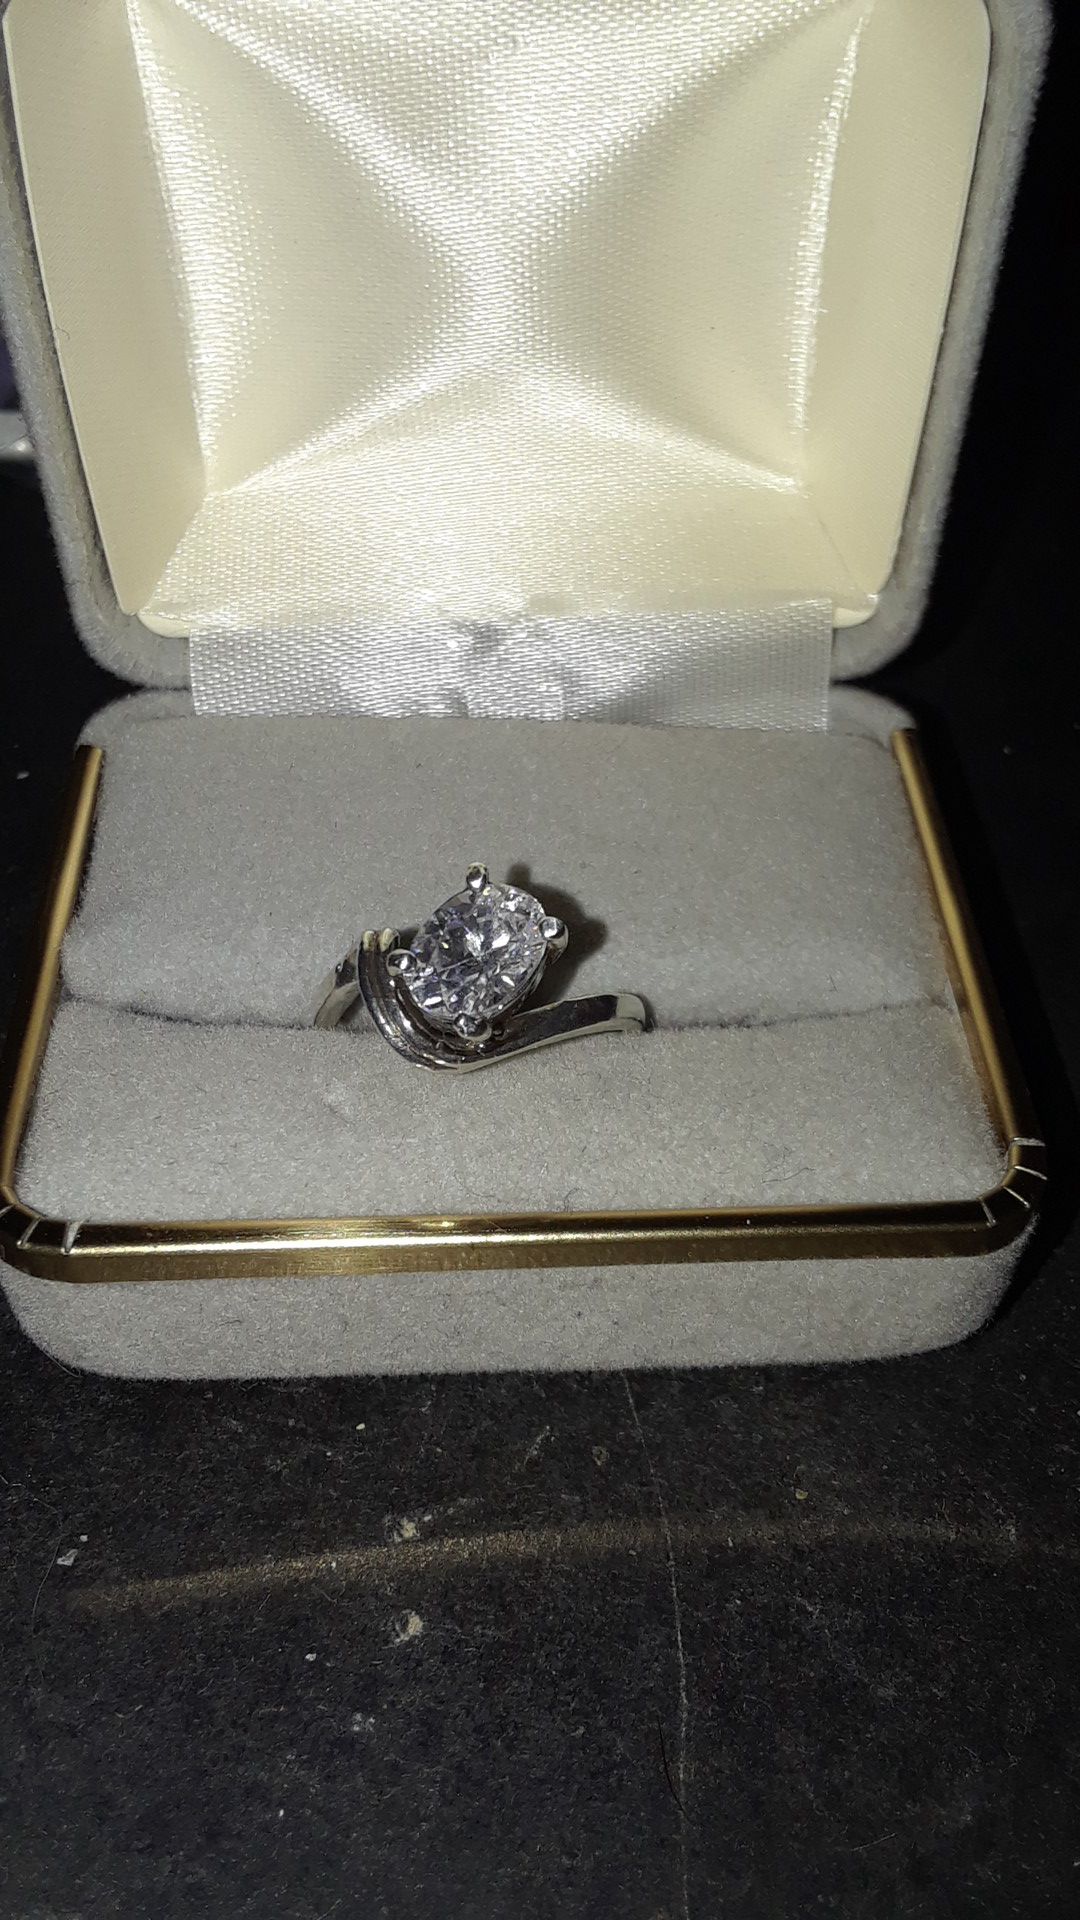 Ladies sterling silver ring